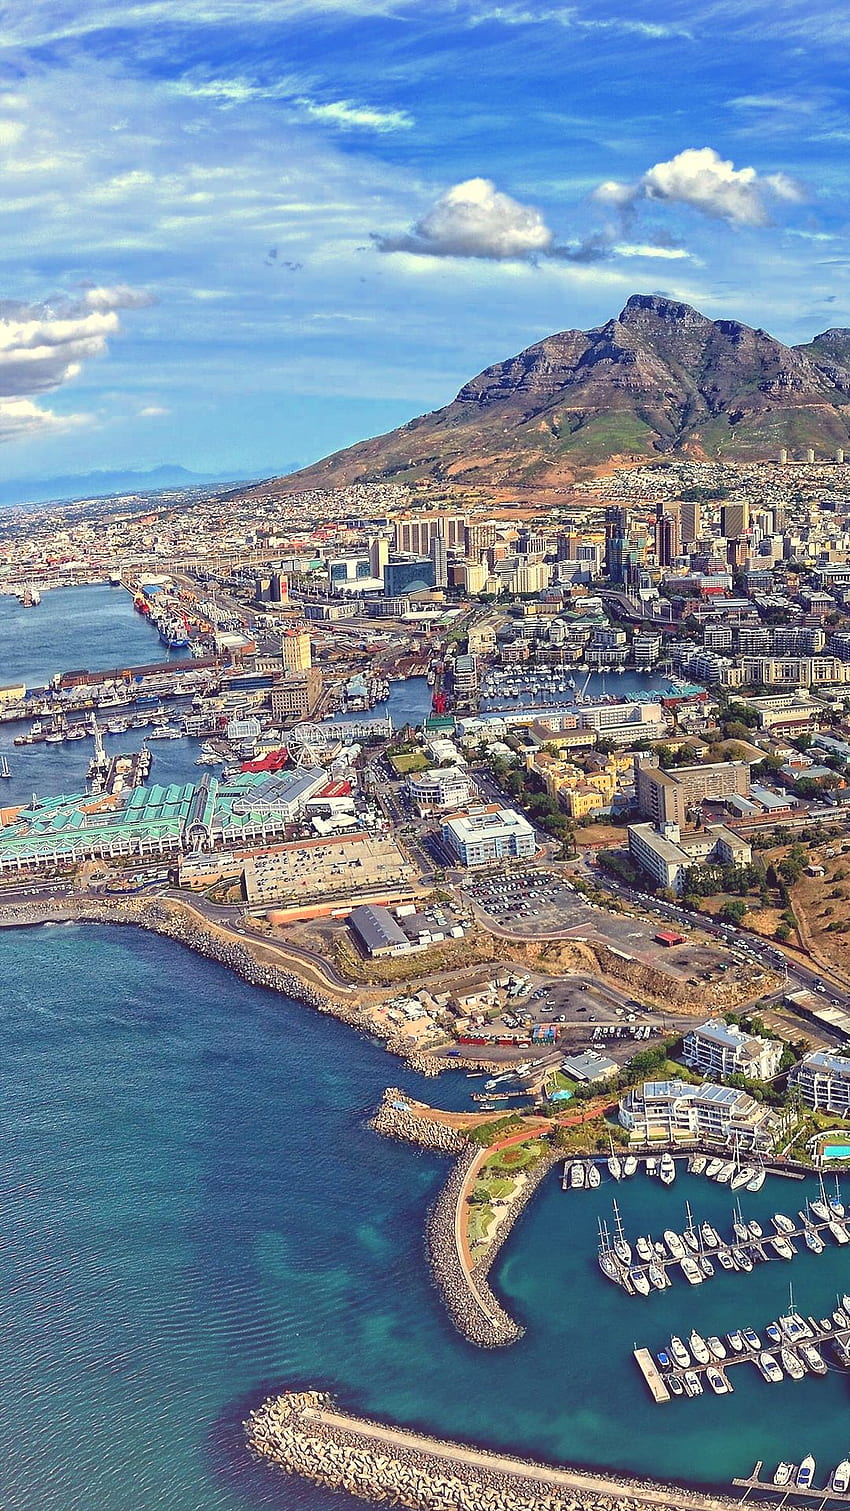 Cidade do Cabo - Airbnb Na Cidade do Cabo África do Sul - Papel de parede de celular HD